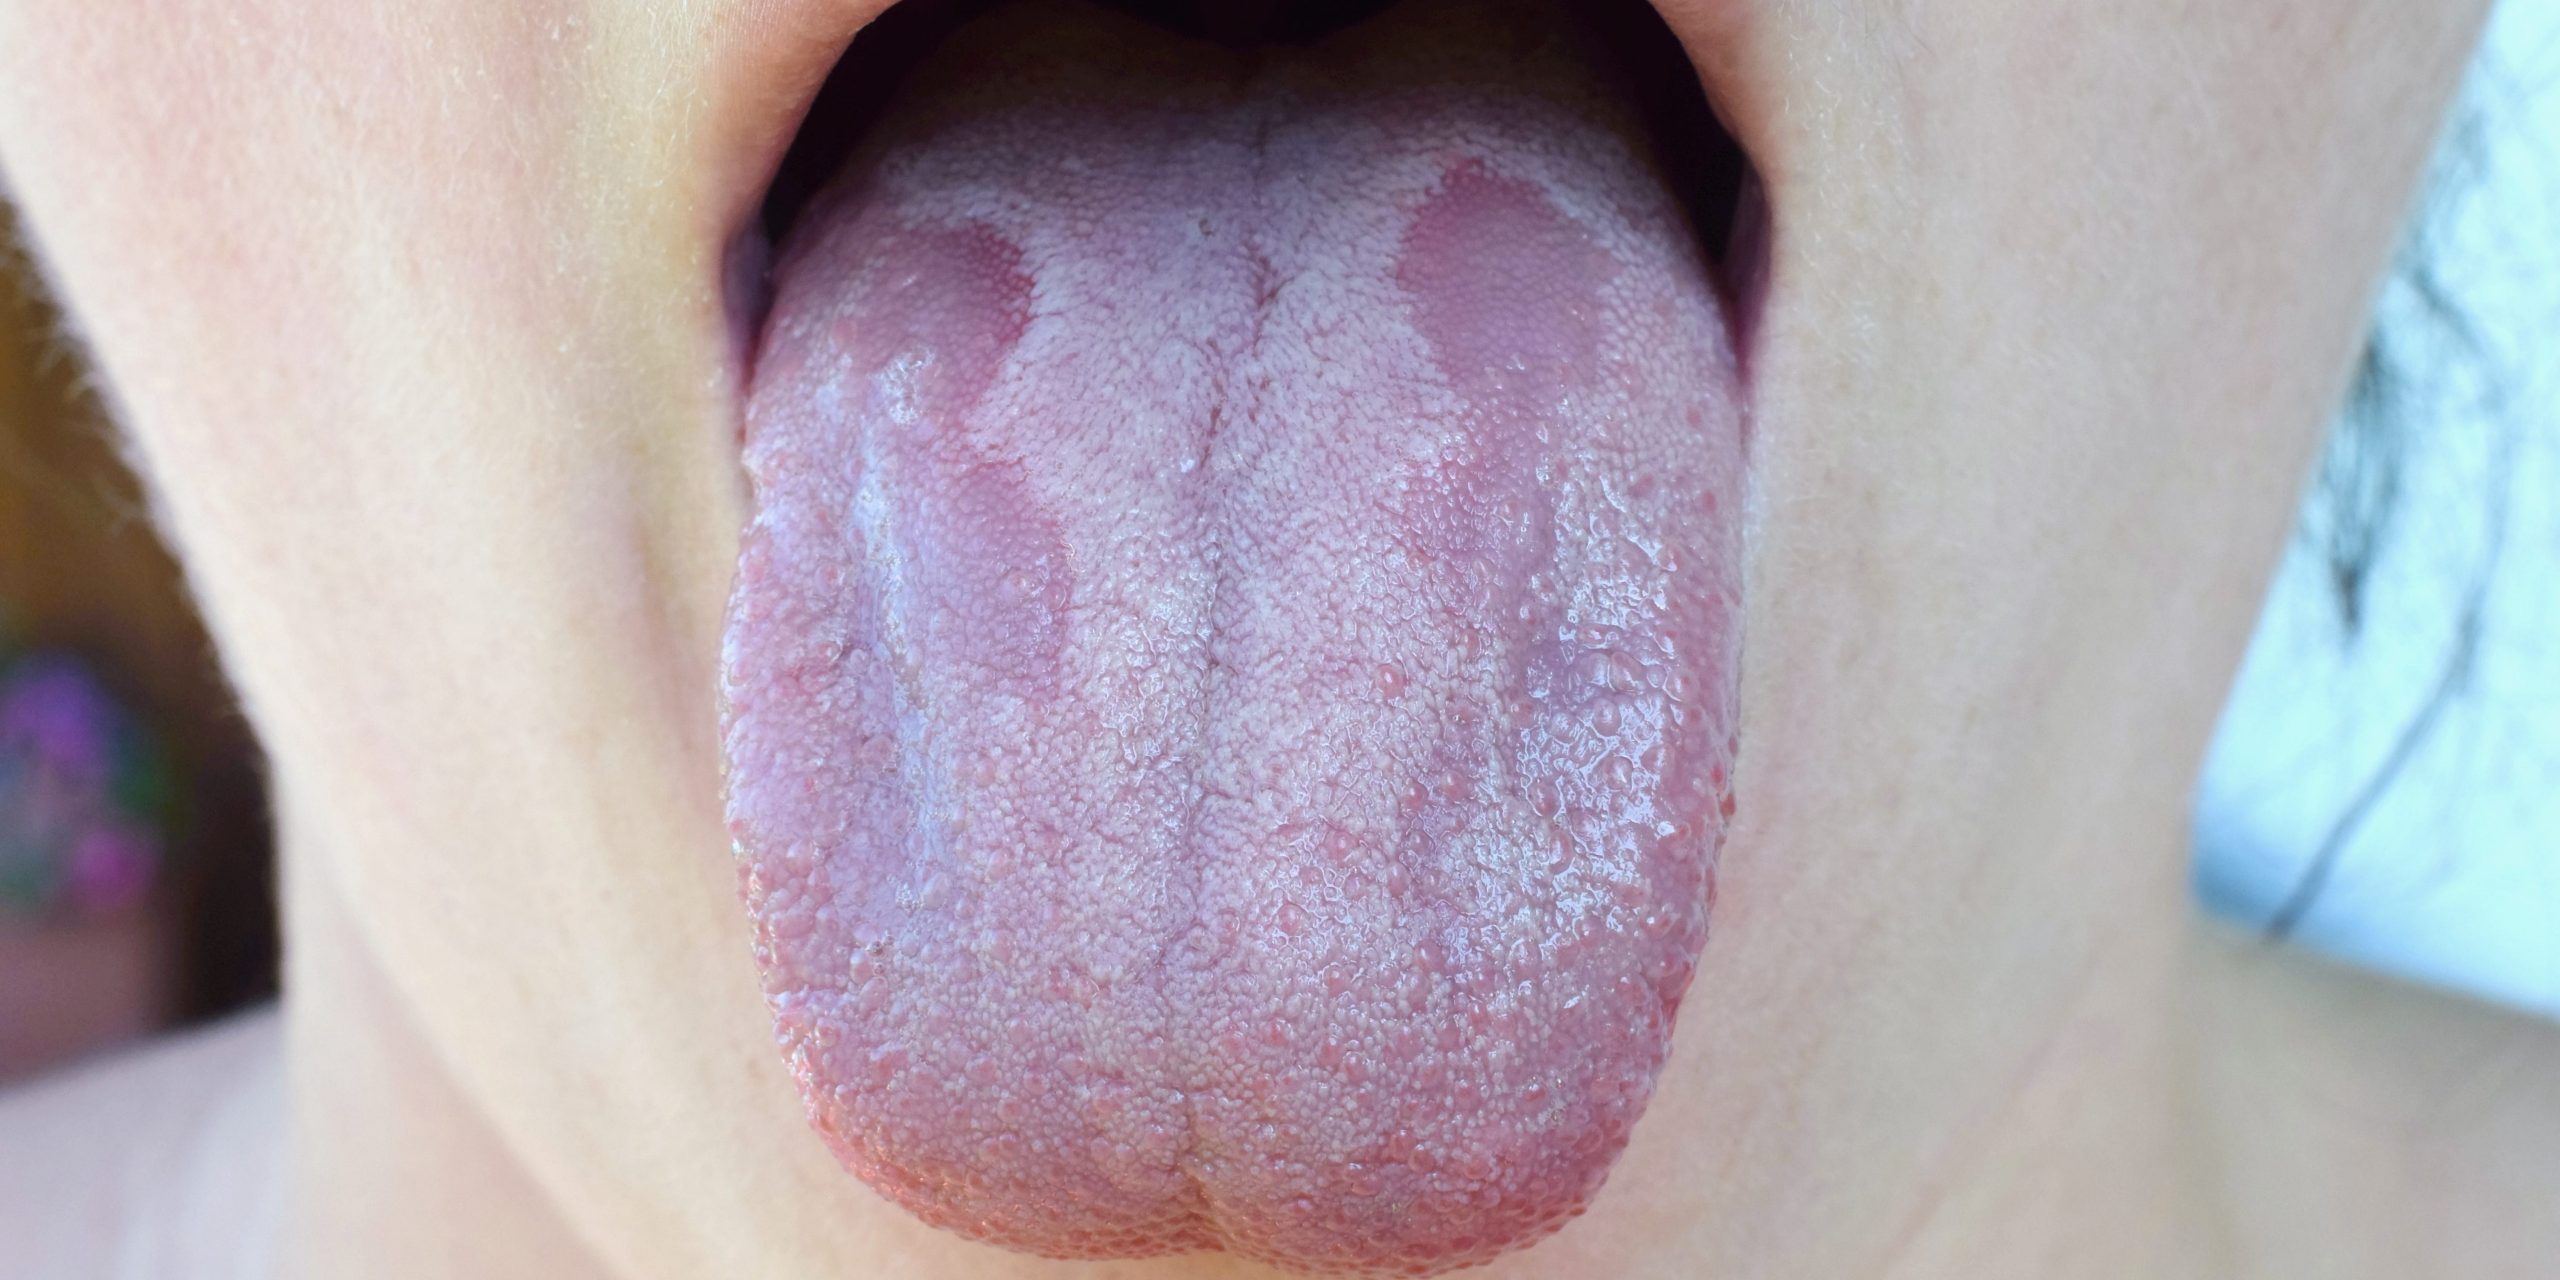 white tongue